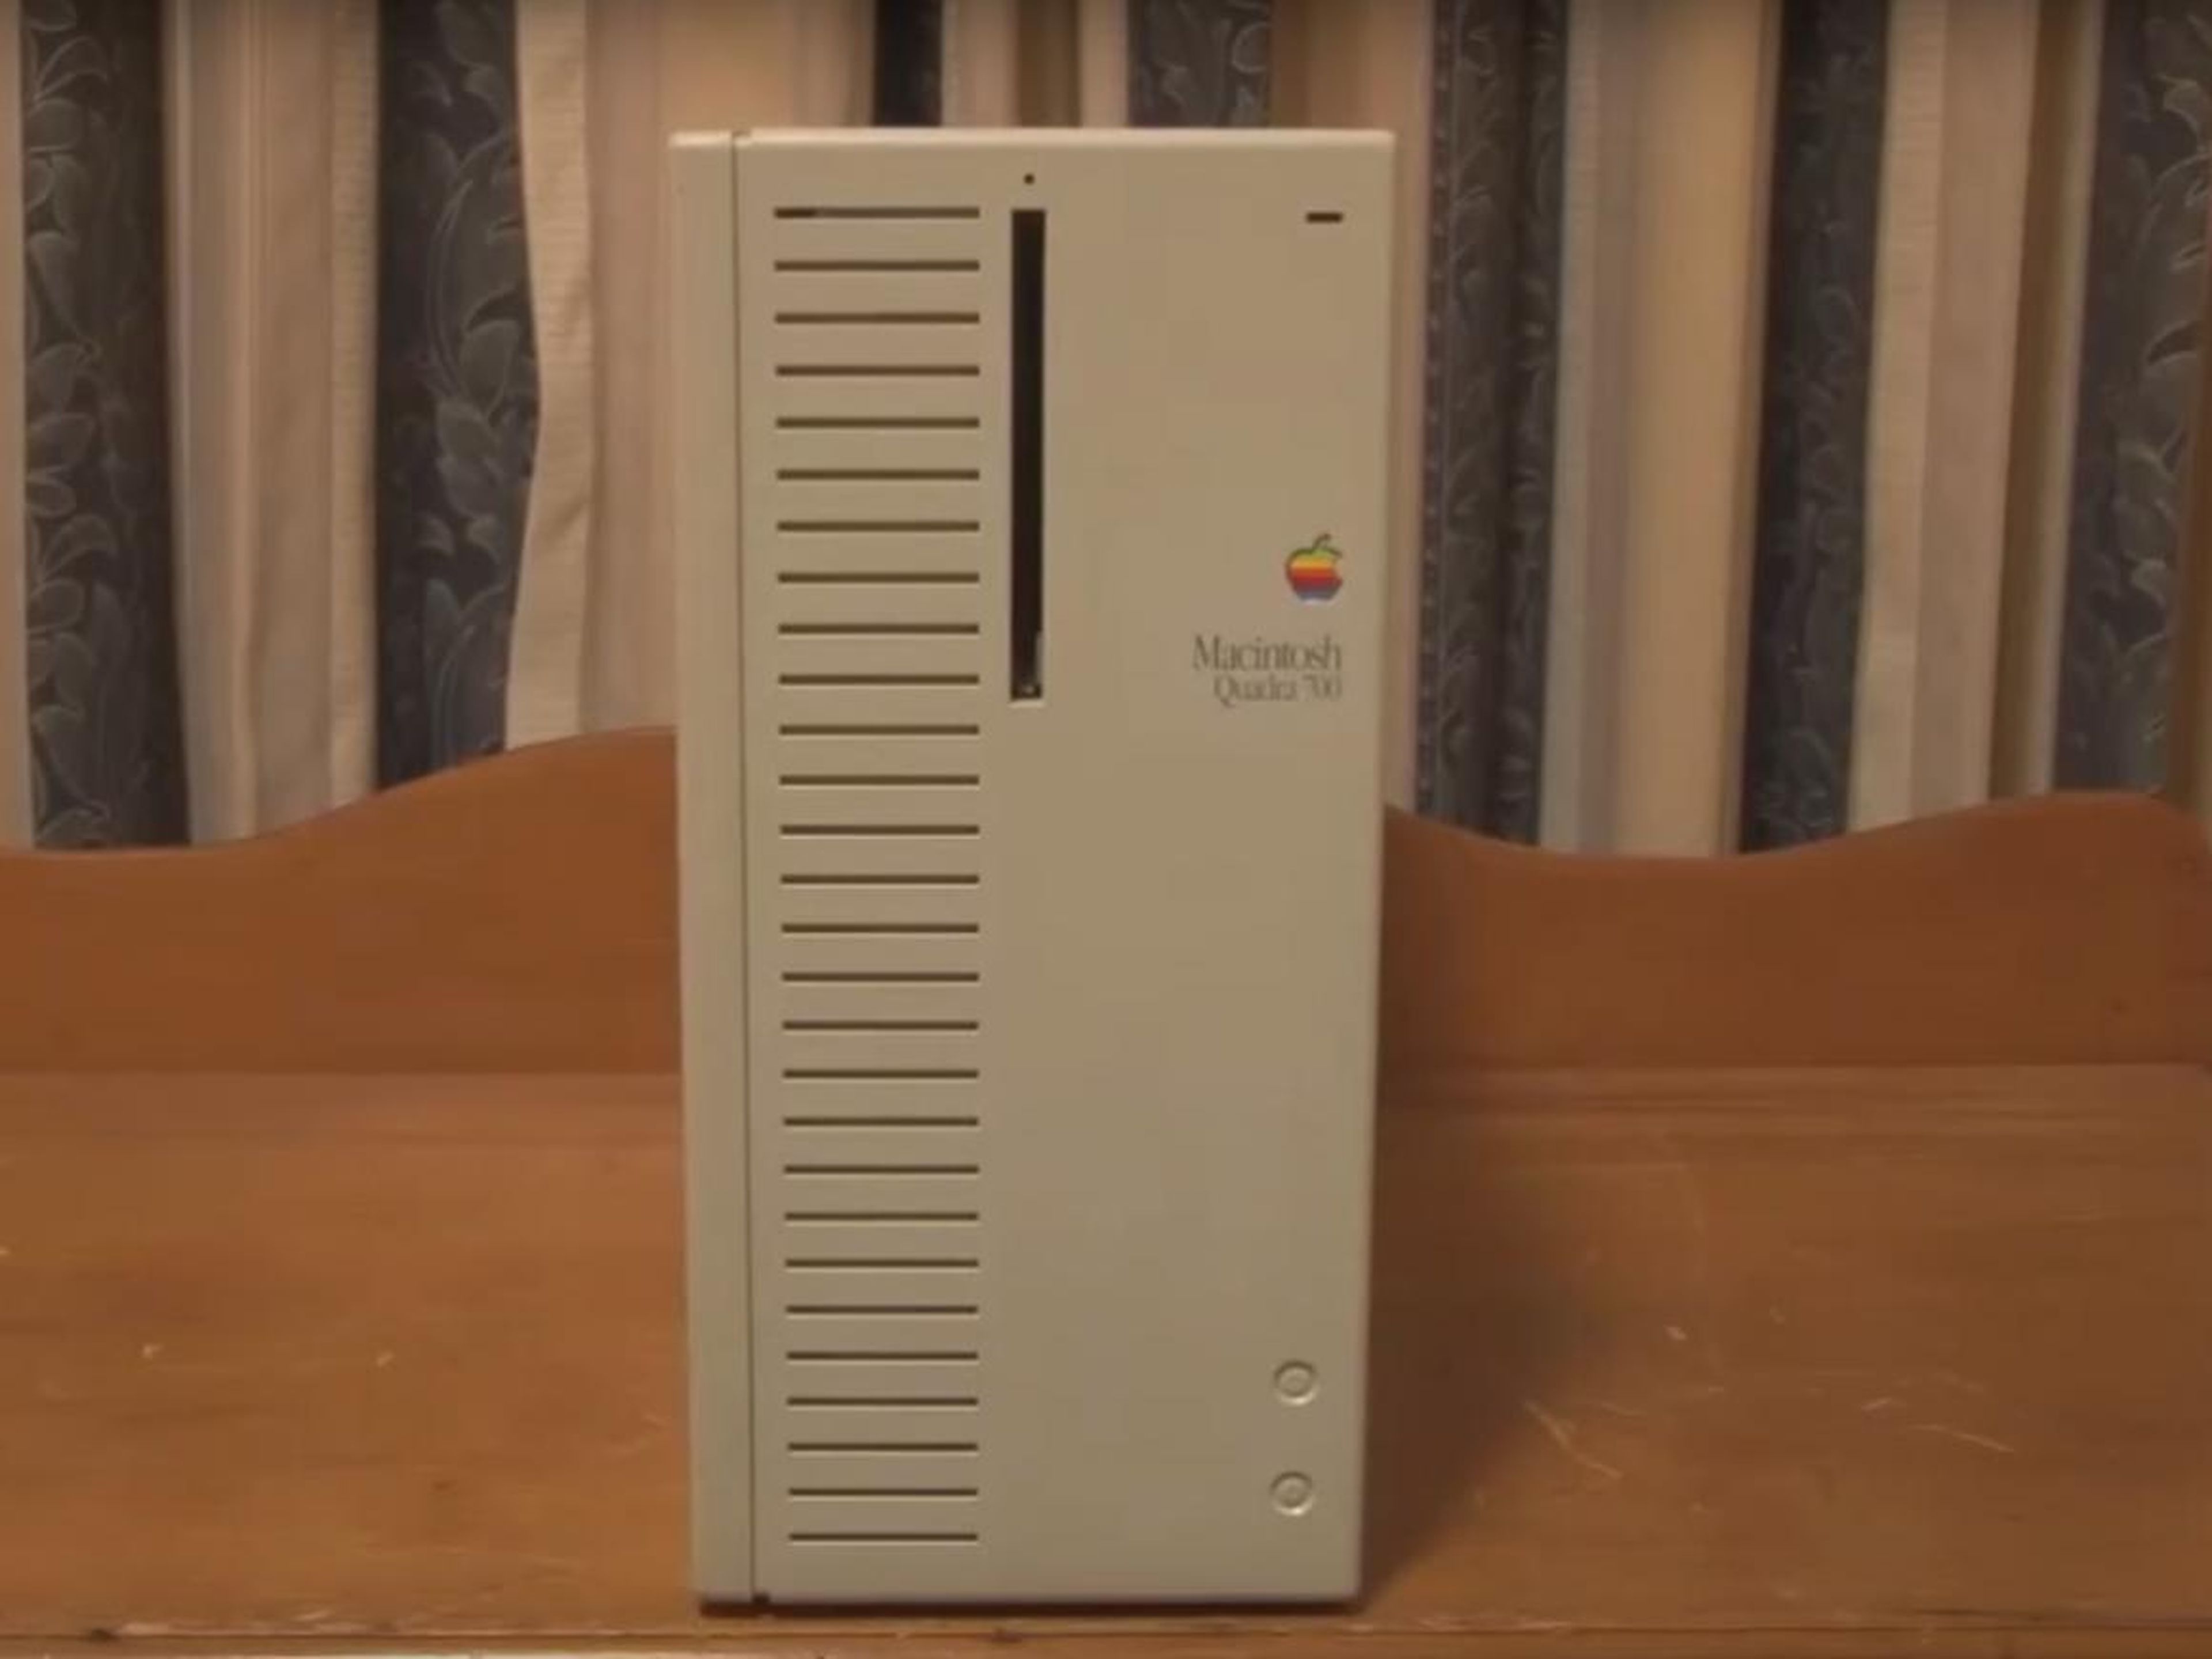 14. Macintosh Quadra 700 (1991) — $5,700